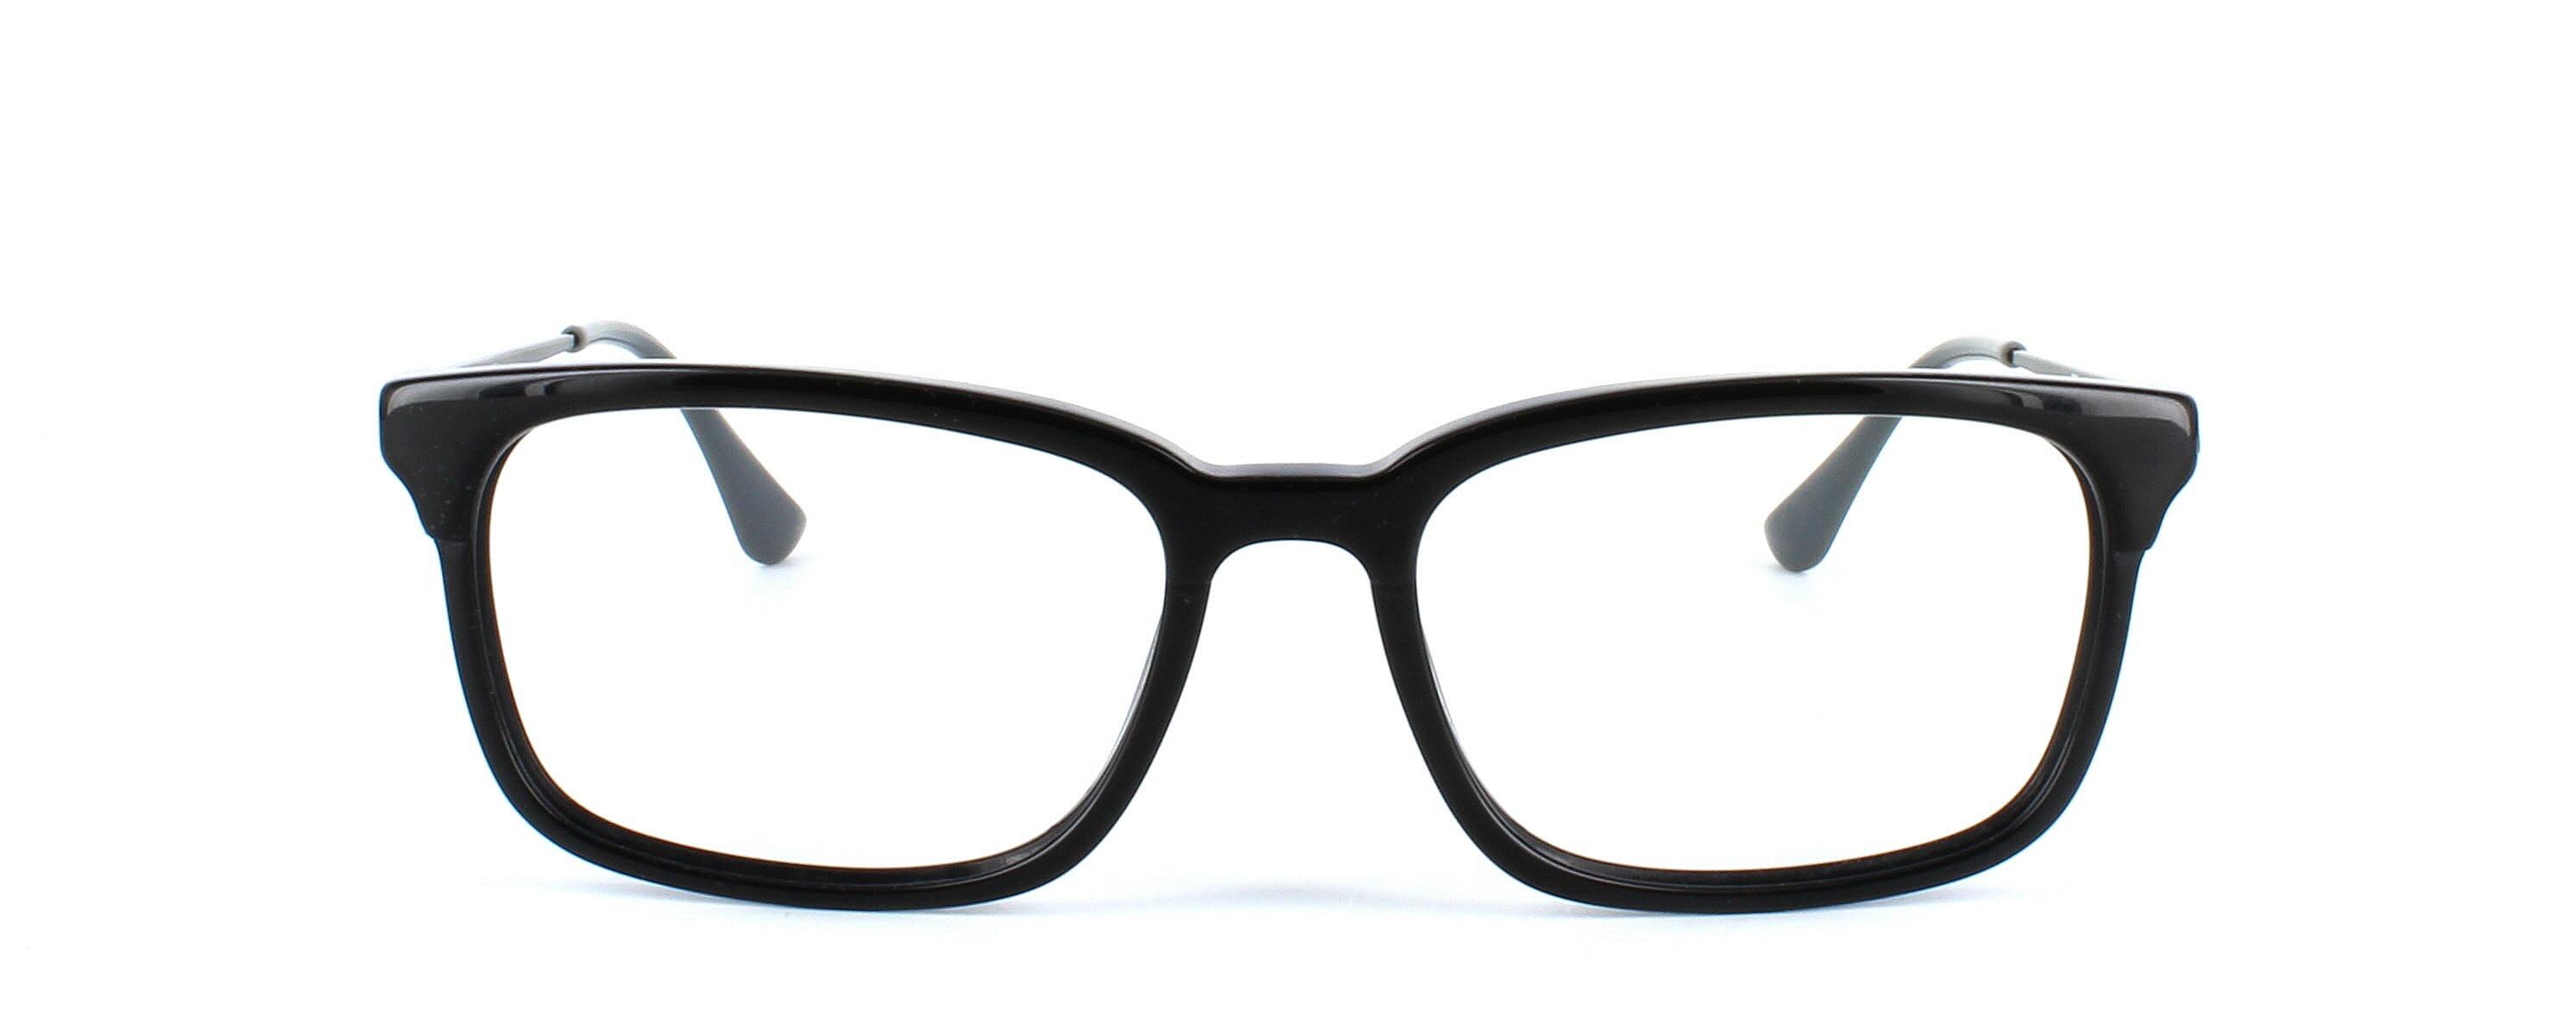 Ray Ban 53641 - Unisex shiny black acetate glasses frame - image view 2